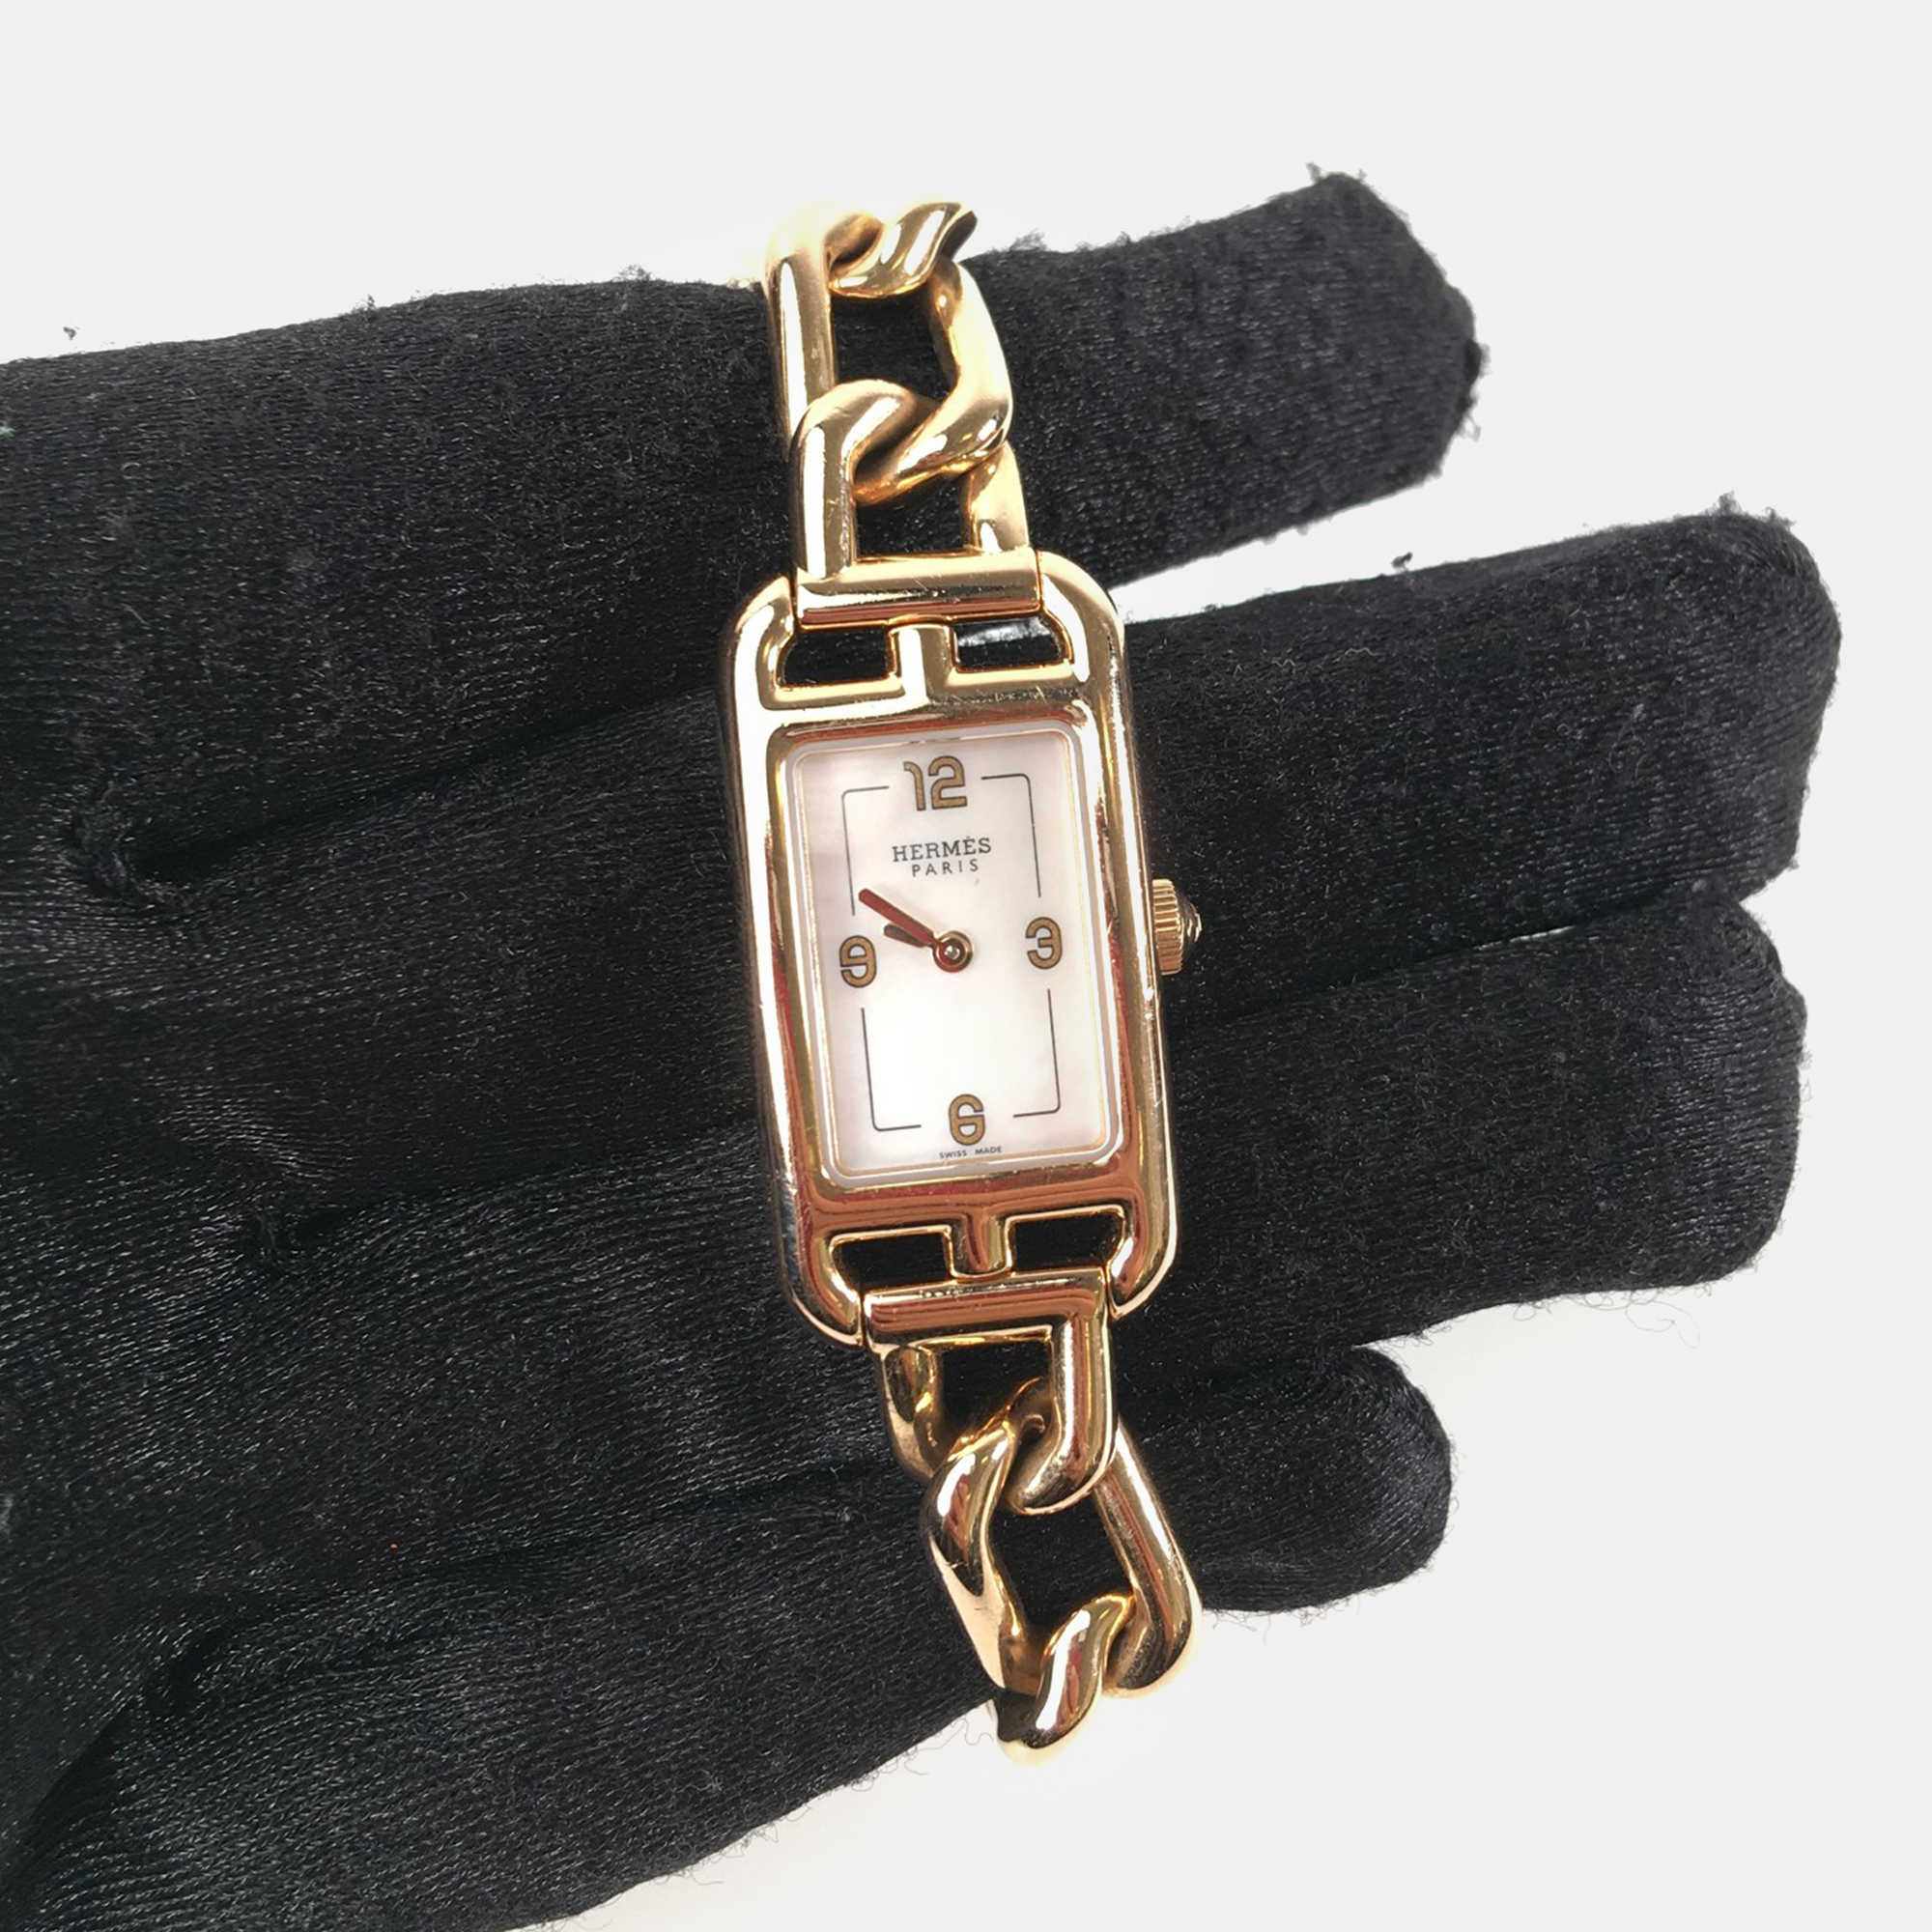 Hermes 18k rose gold nantucket mother of pearl watch 16 mm